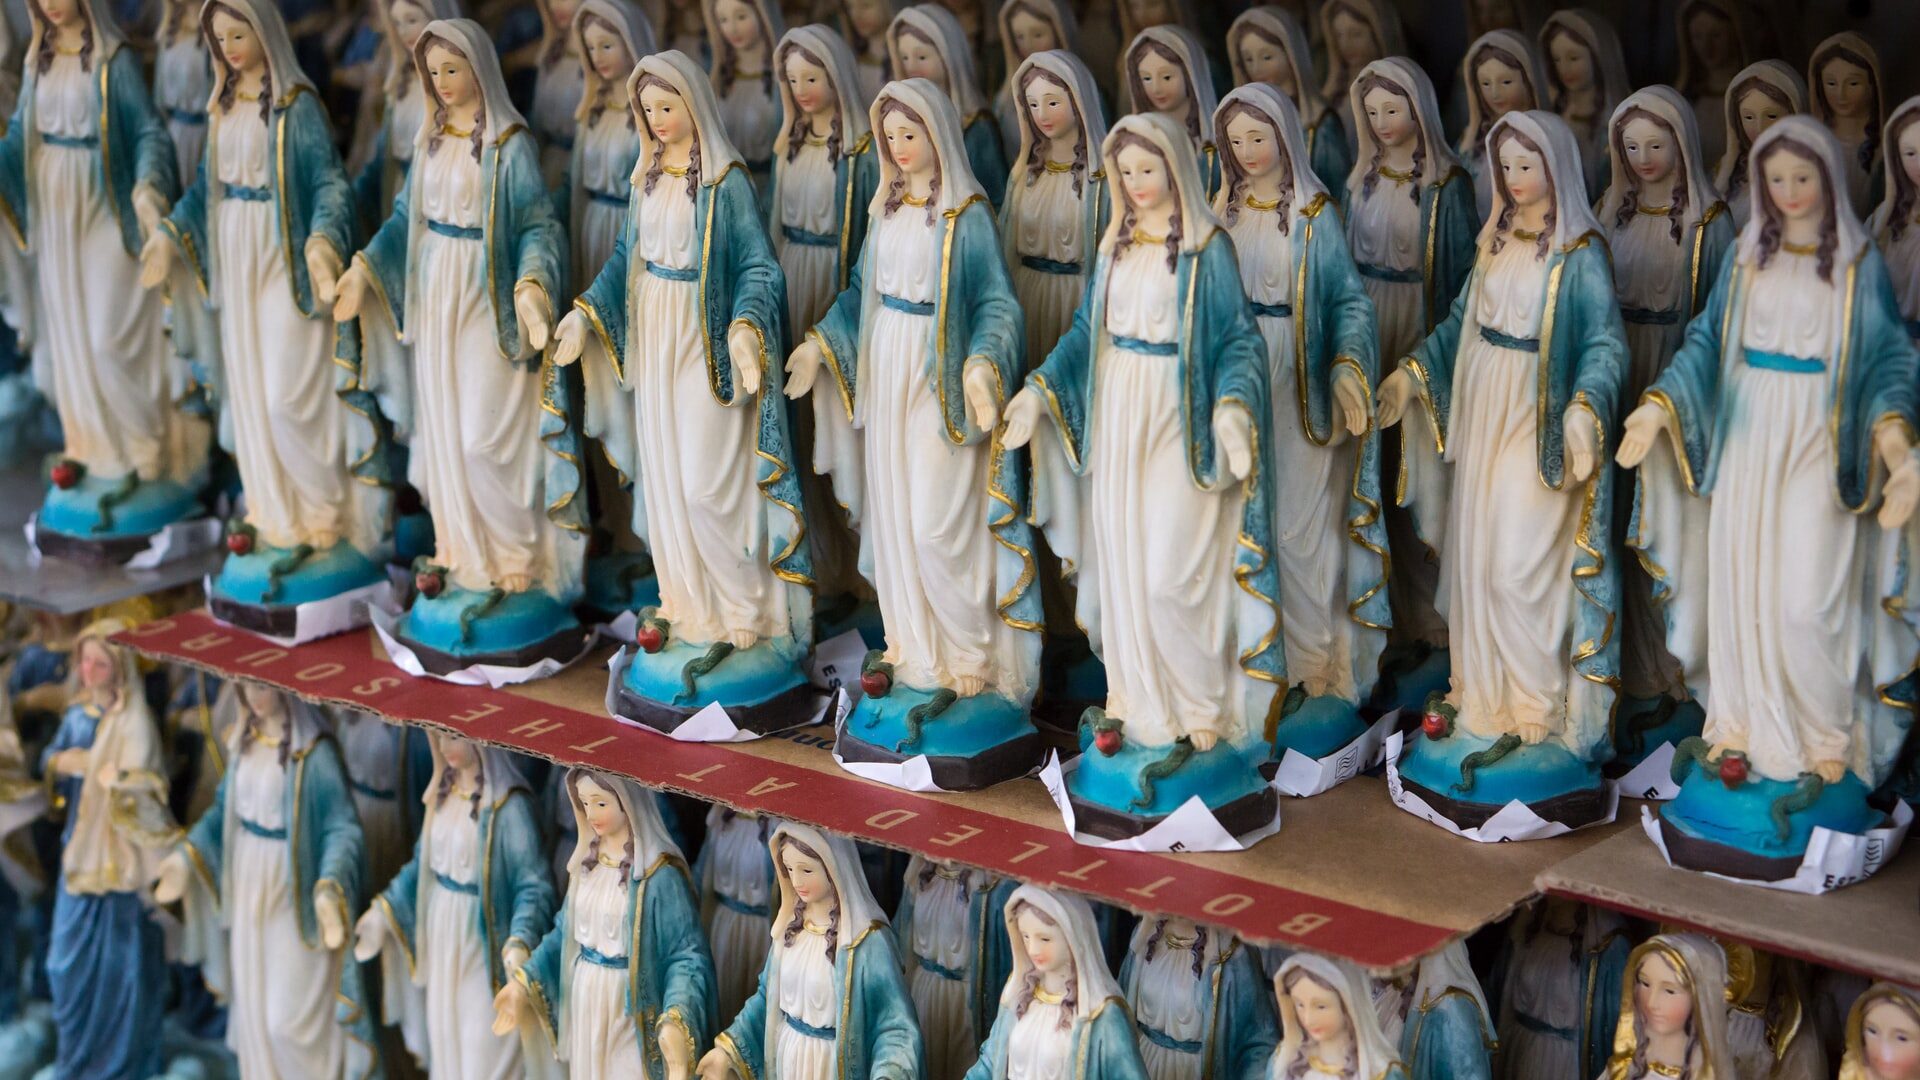 Shelves and shelves of Virgin Mary statuettes.